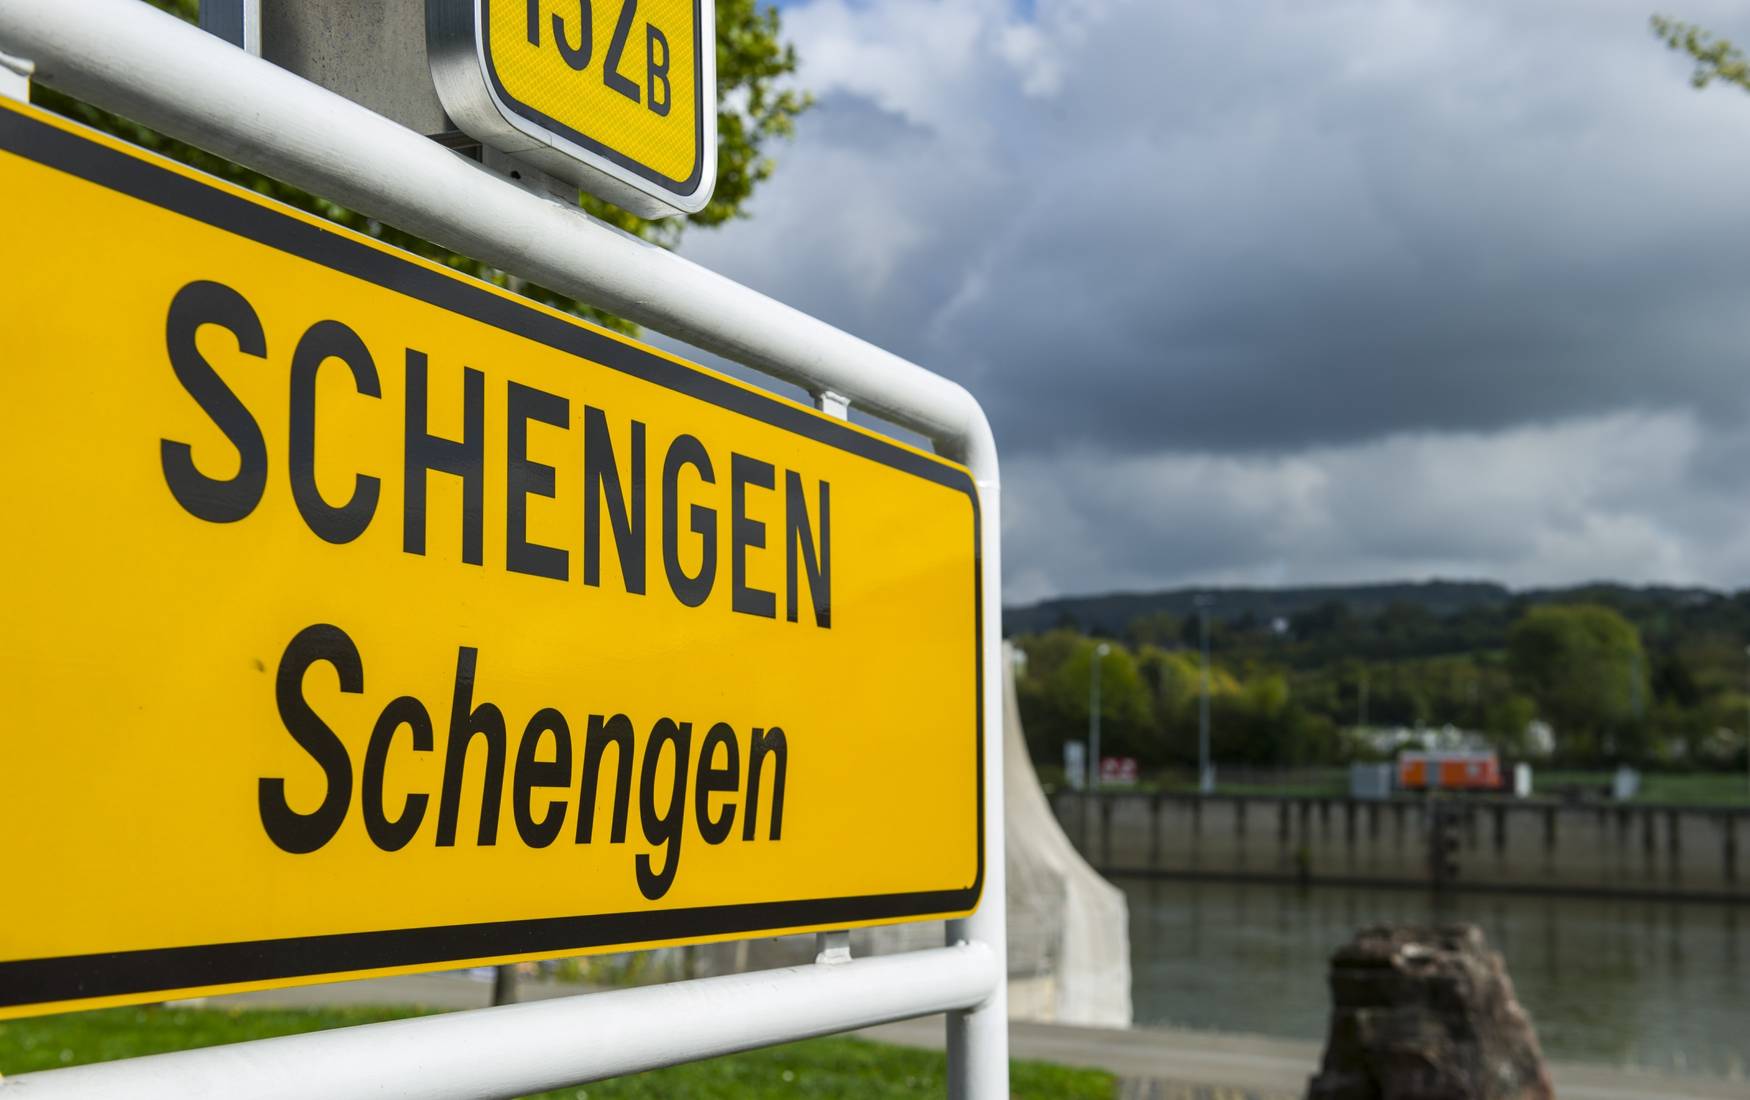 Шенген